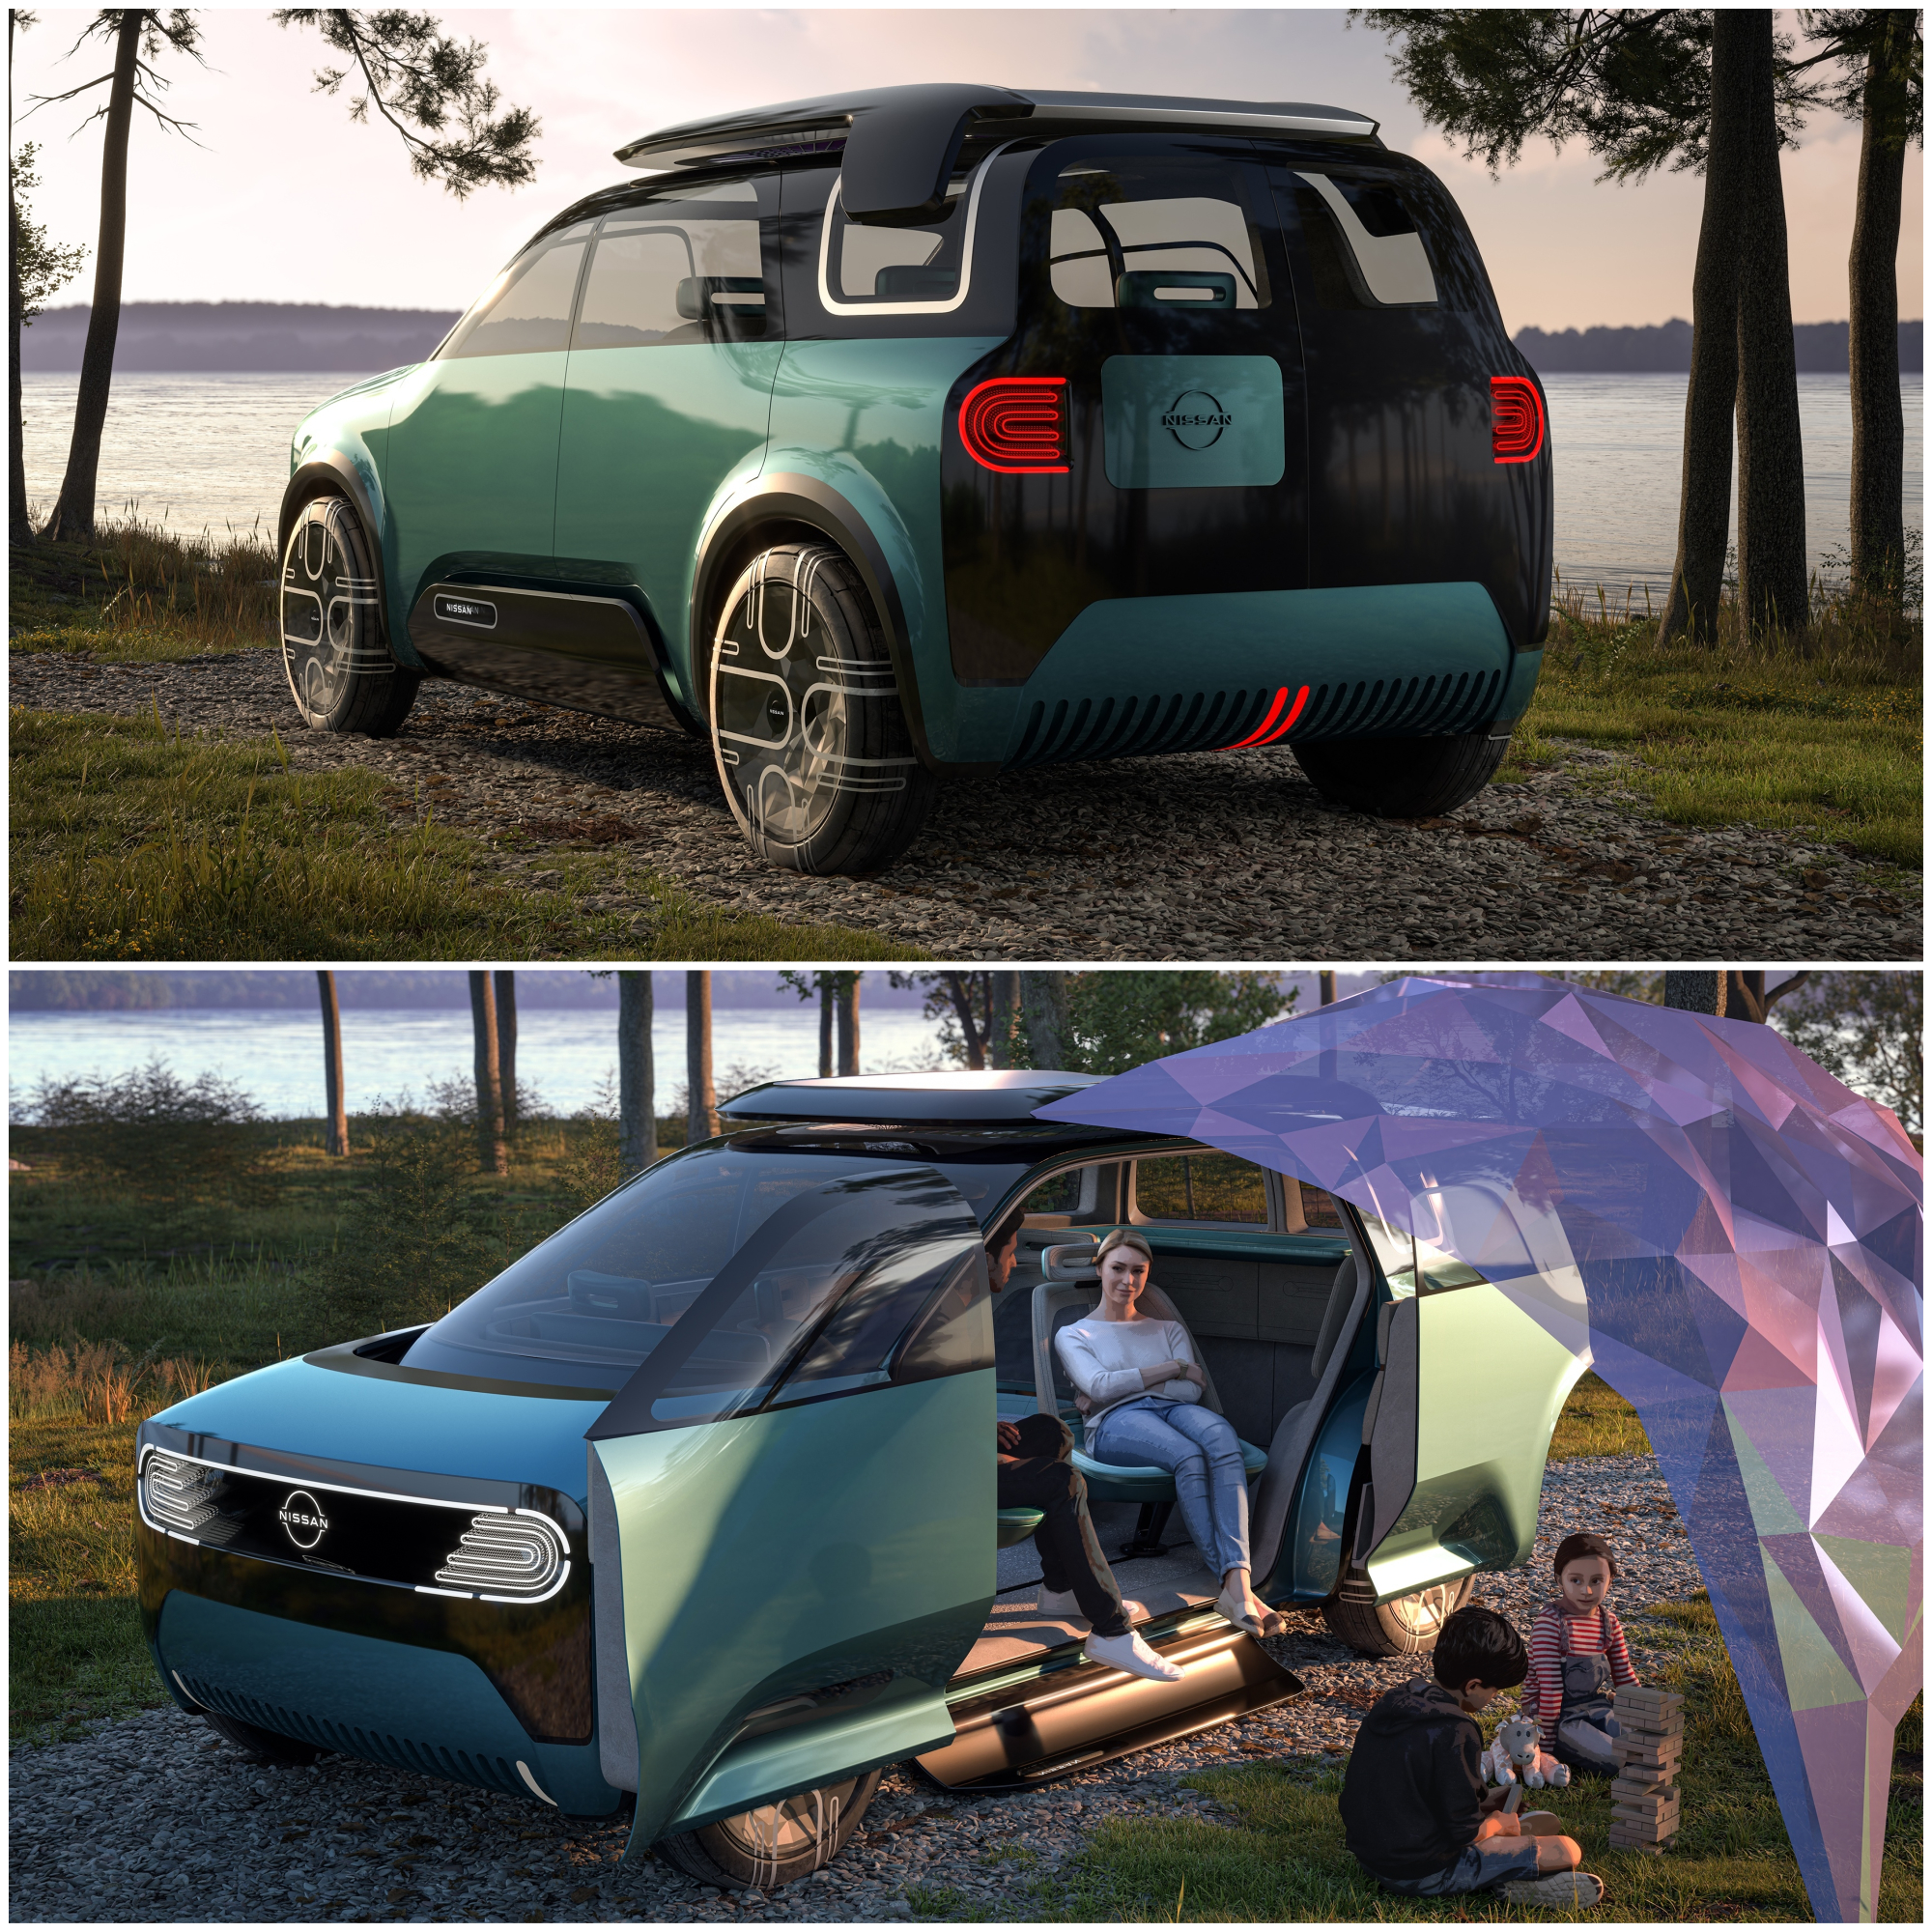 Nissan Ambition 2030 - Nissan Hang-Out - concept car - coches electricos - bateras solidas